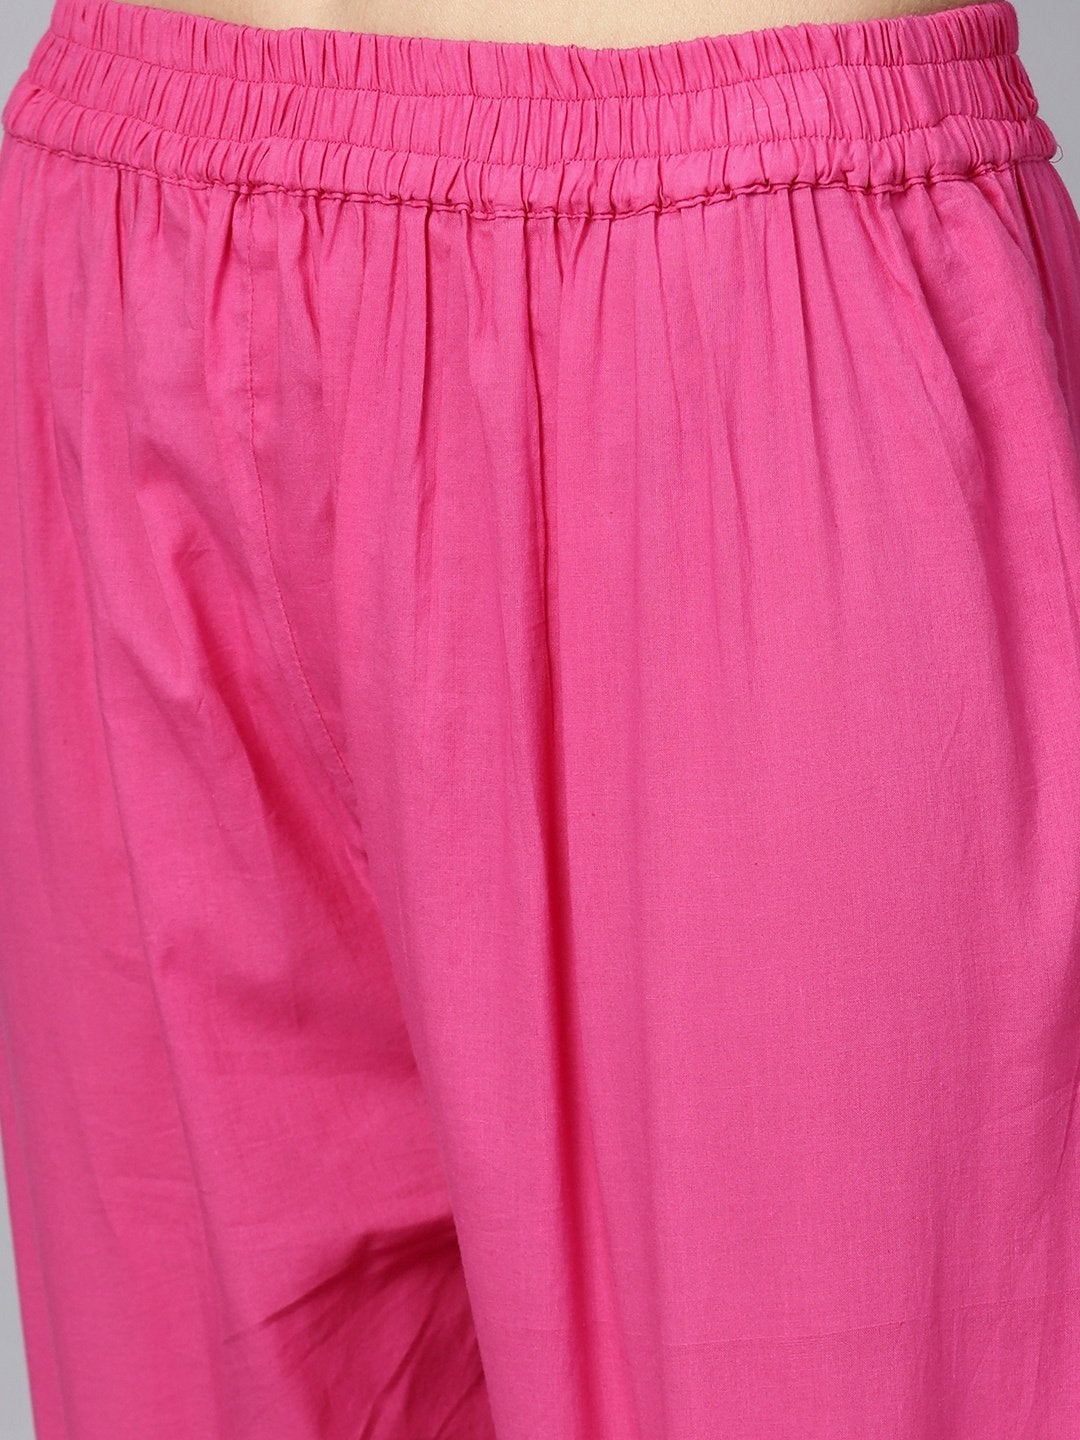 Women's Pink & Golden Printed Kurta with Trousers - Meeranshi